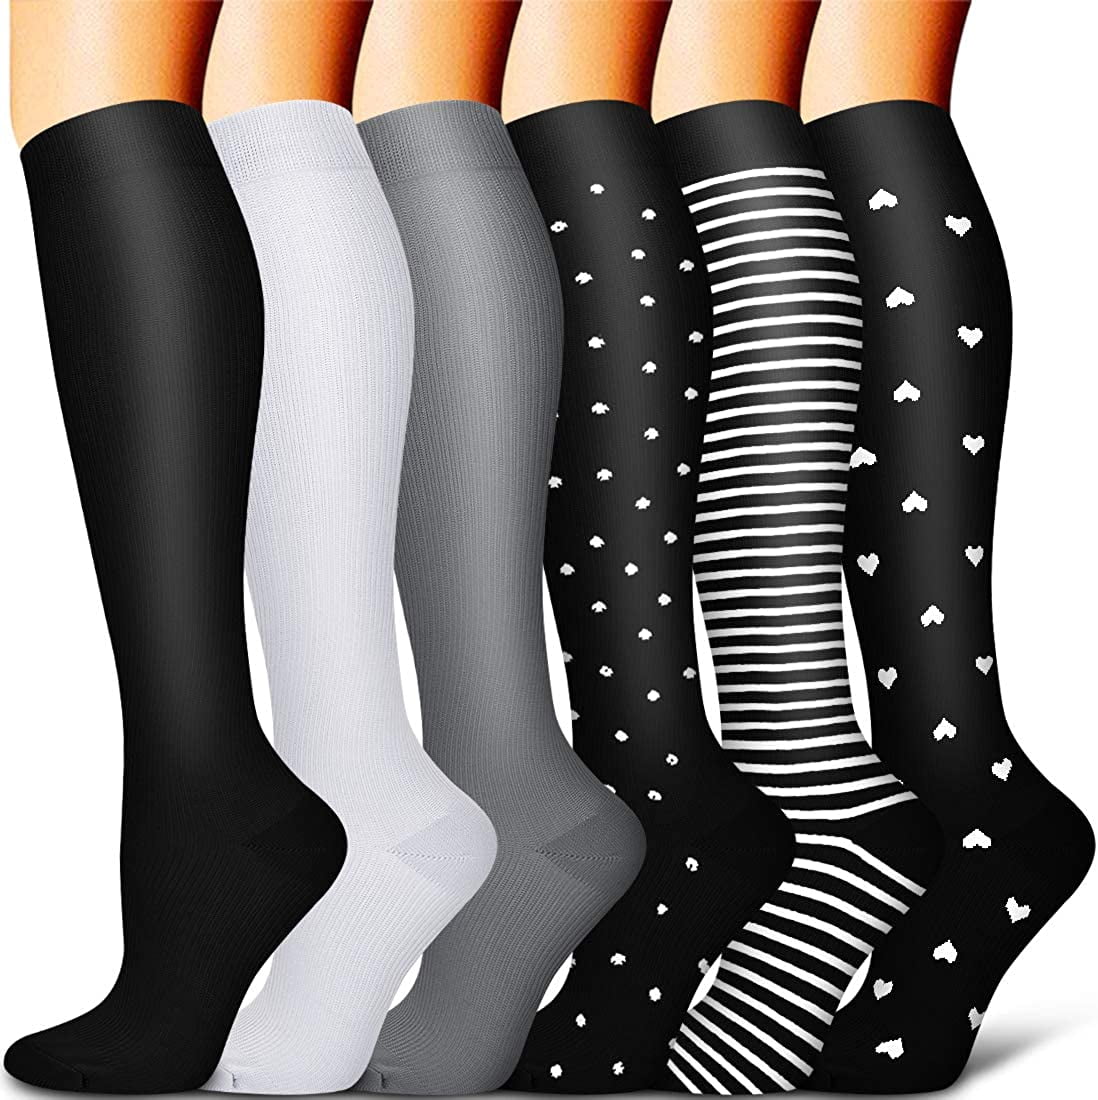 8 Pack Copper Knee High Compression Socks For Men & Women-Best For Running,Athletic,Medical,Pregnancy and Travel 15-20mmHg 